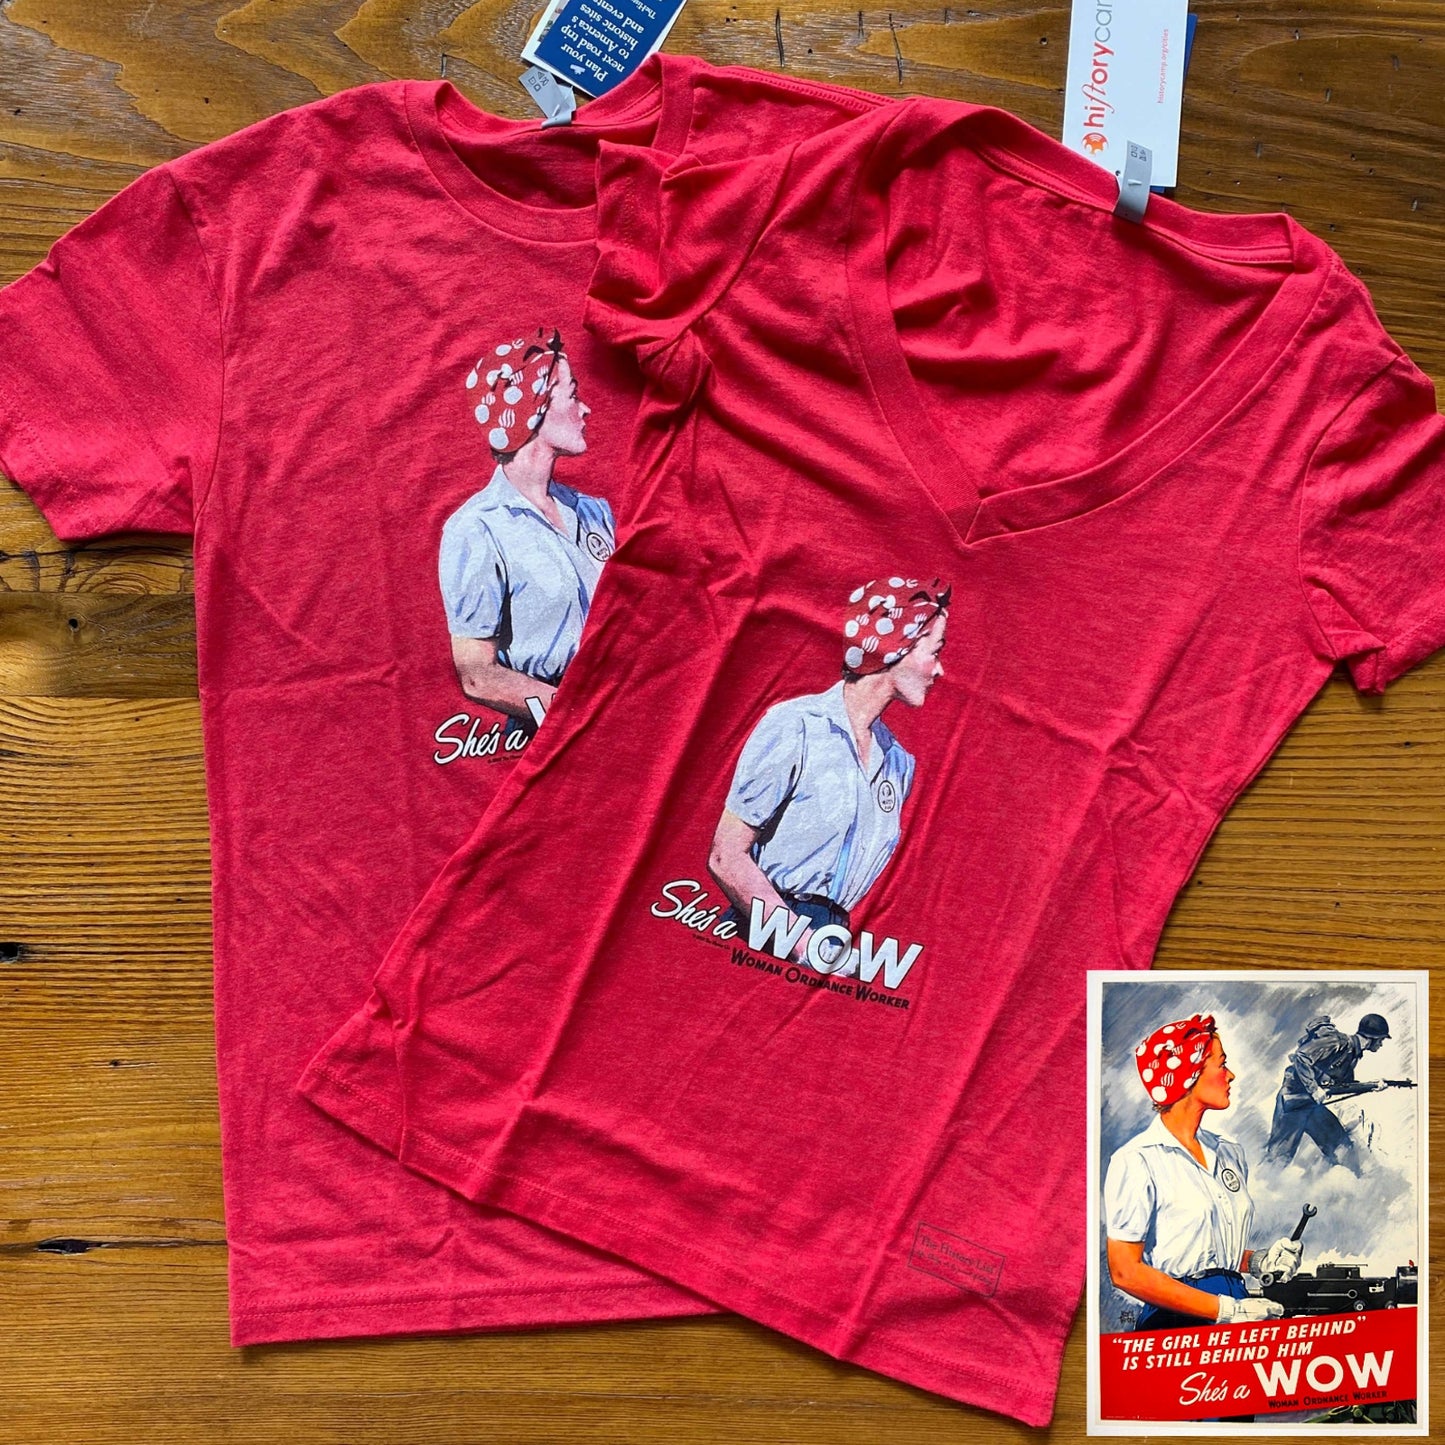 "She's a W.O.W." Shirt and v-neck shirt from The History List store